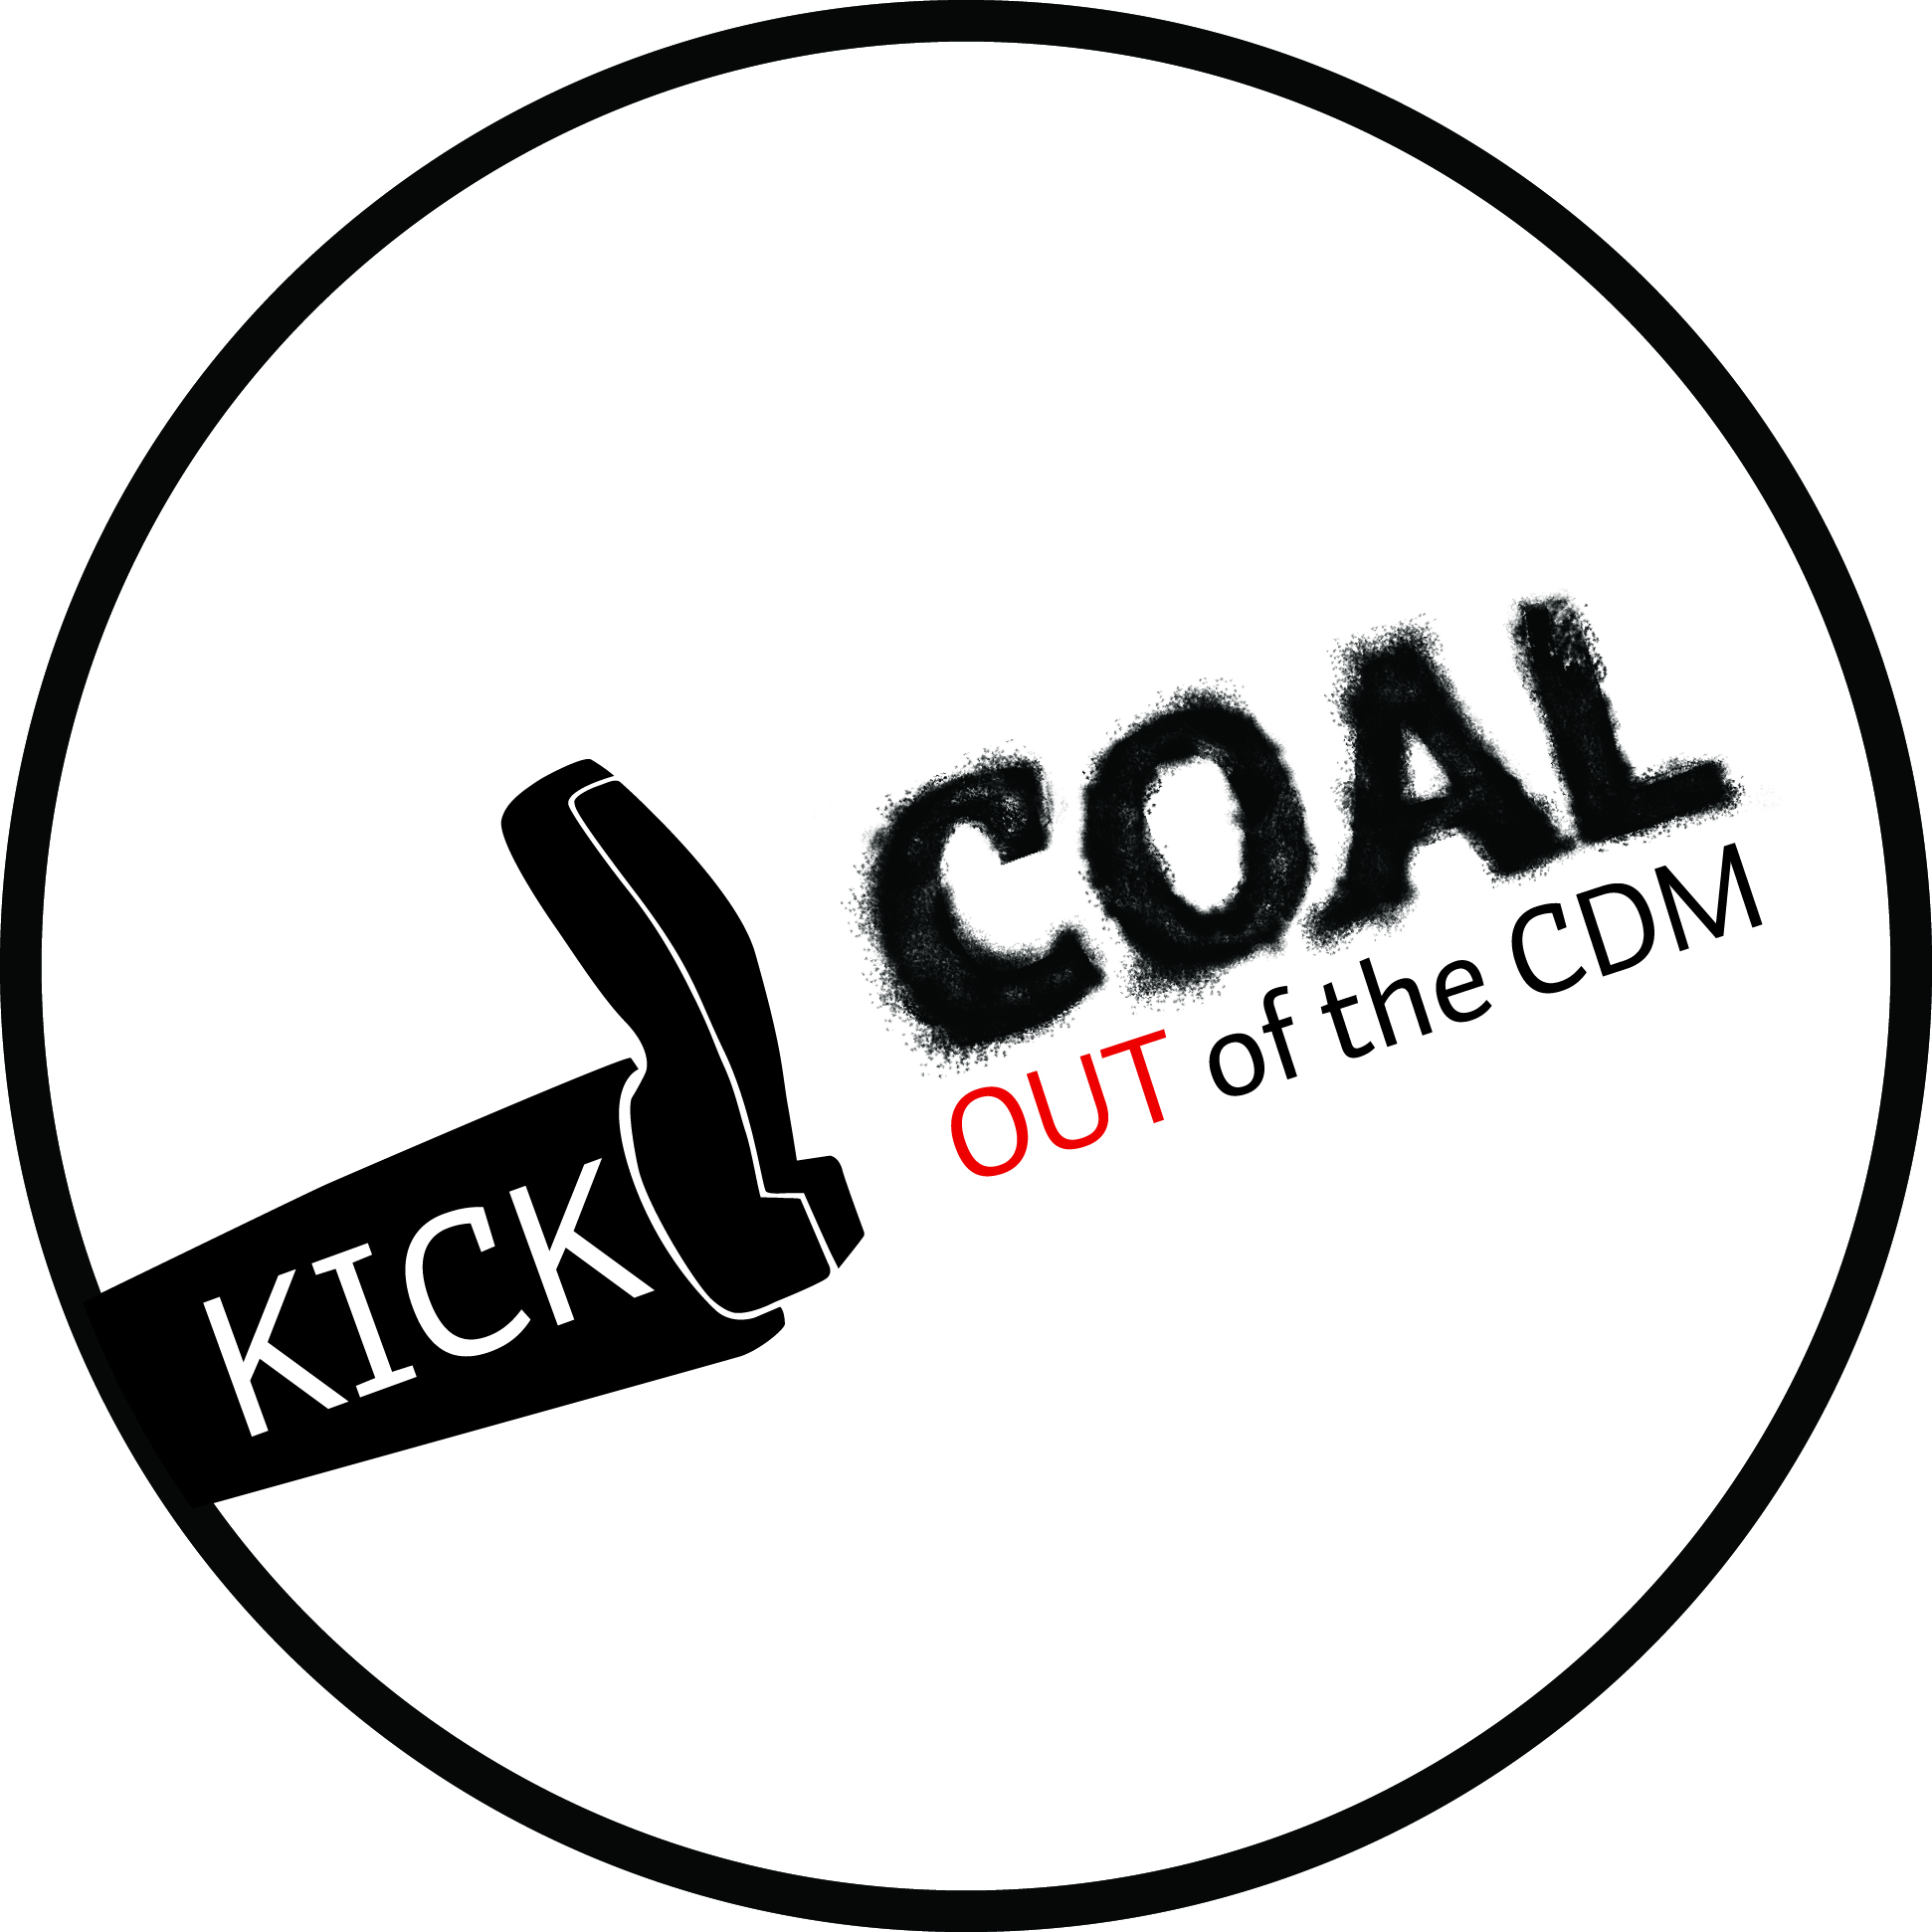 Kick Coal Out_black and white circle